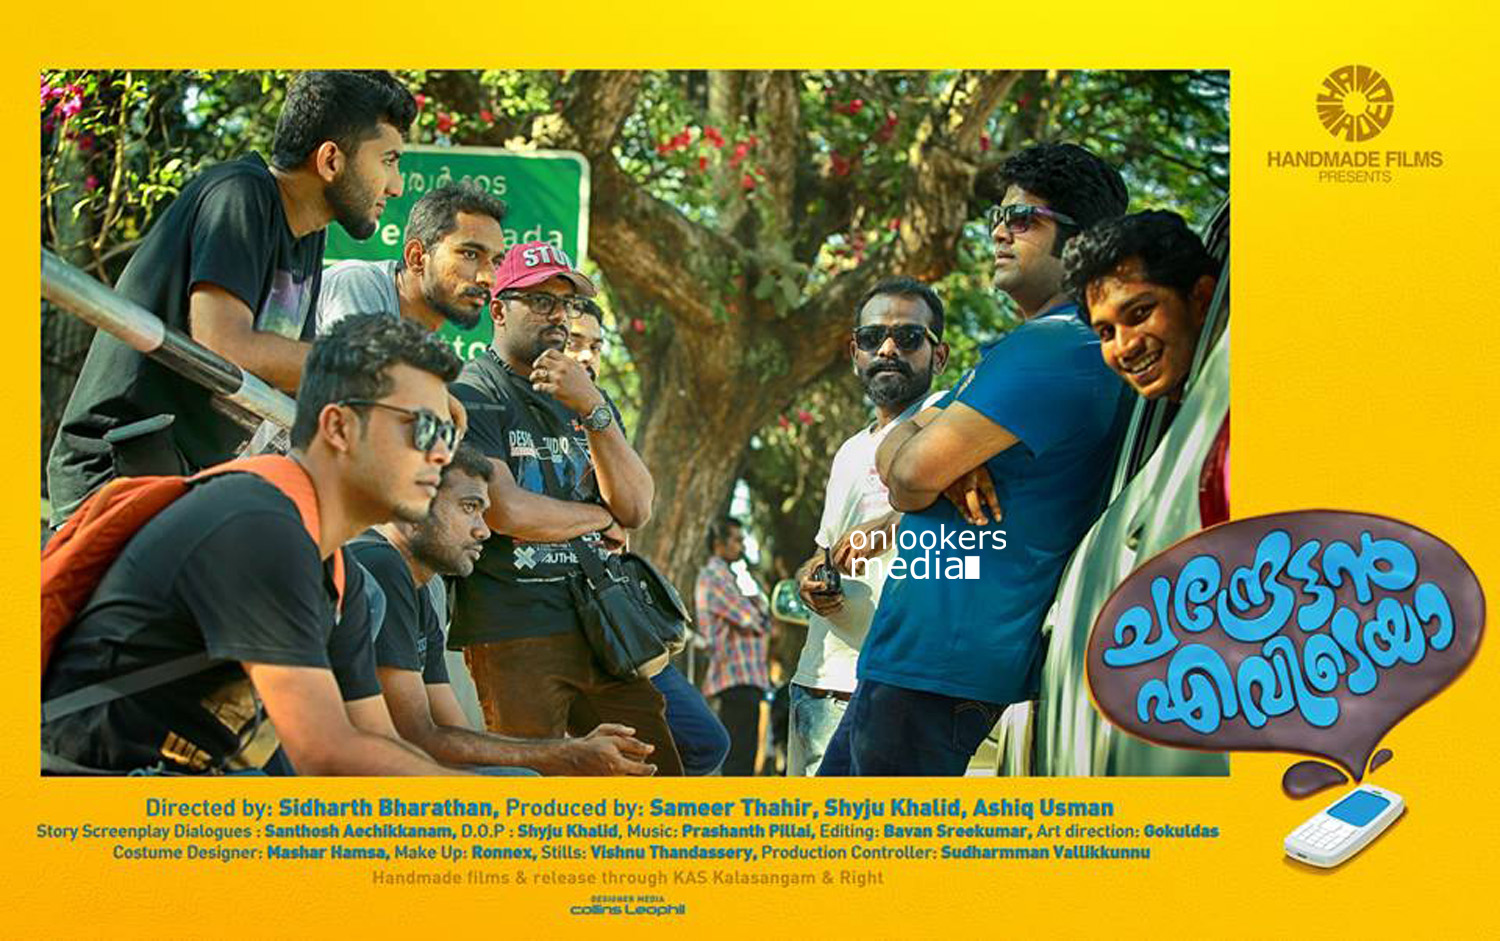 https://onlookersmedia.in/wp-content/uploads/2015/04/Chandrettan-Evideya-Posters-Stills-Images-Dileep-Namitha-Pramod-Anusree-Malayalam-Movie-2015-Onlookers-Media-2.jpg